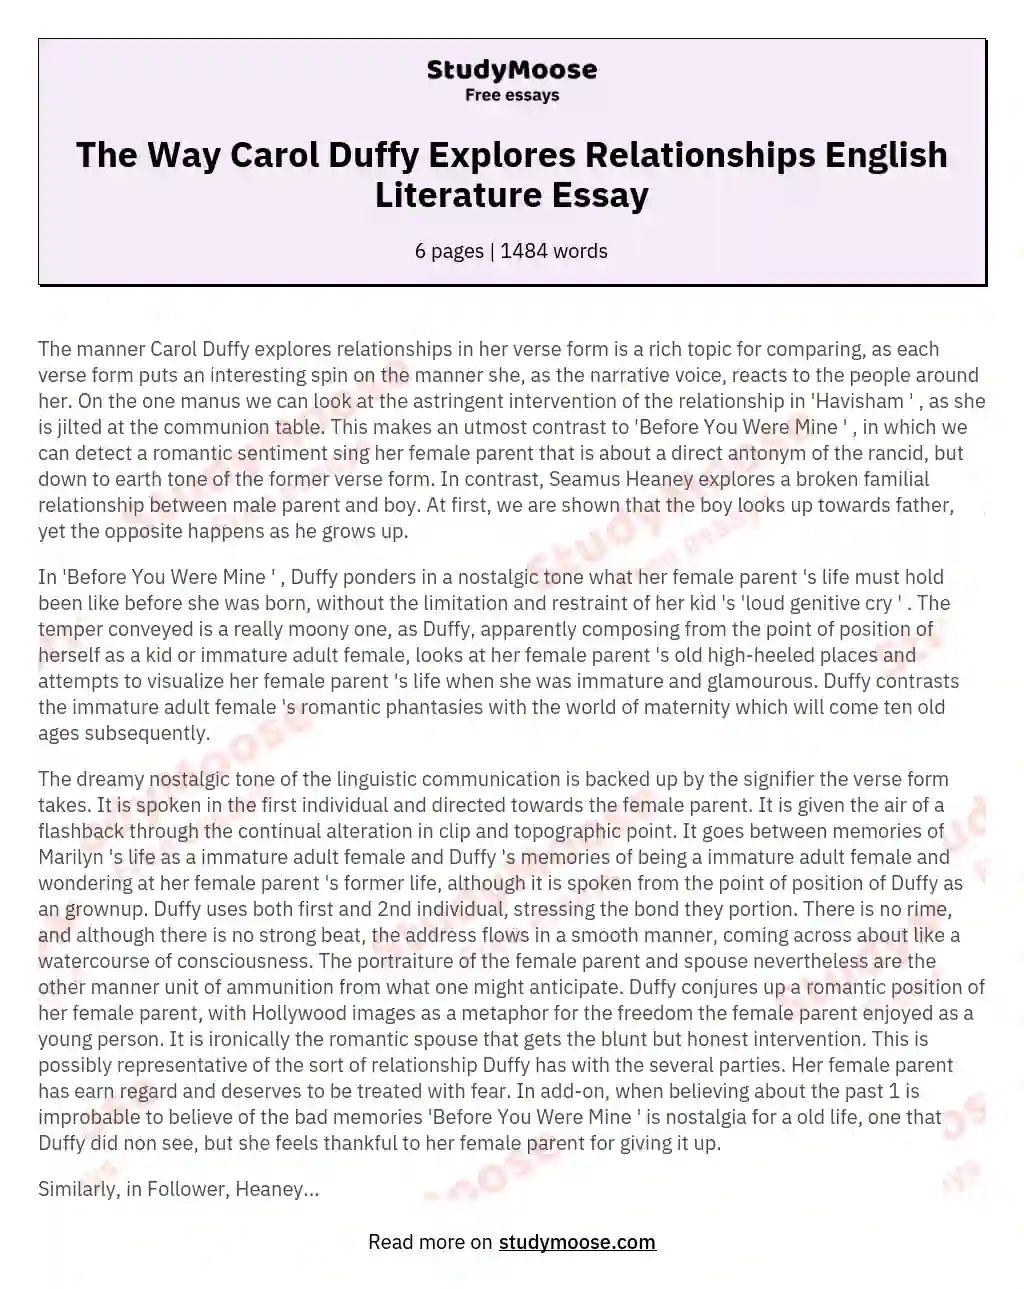 The Way Carol Duffy Explores Relationships English Literature Essay